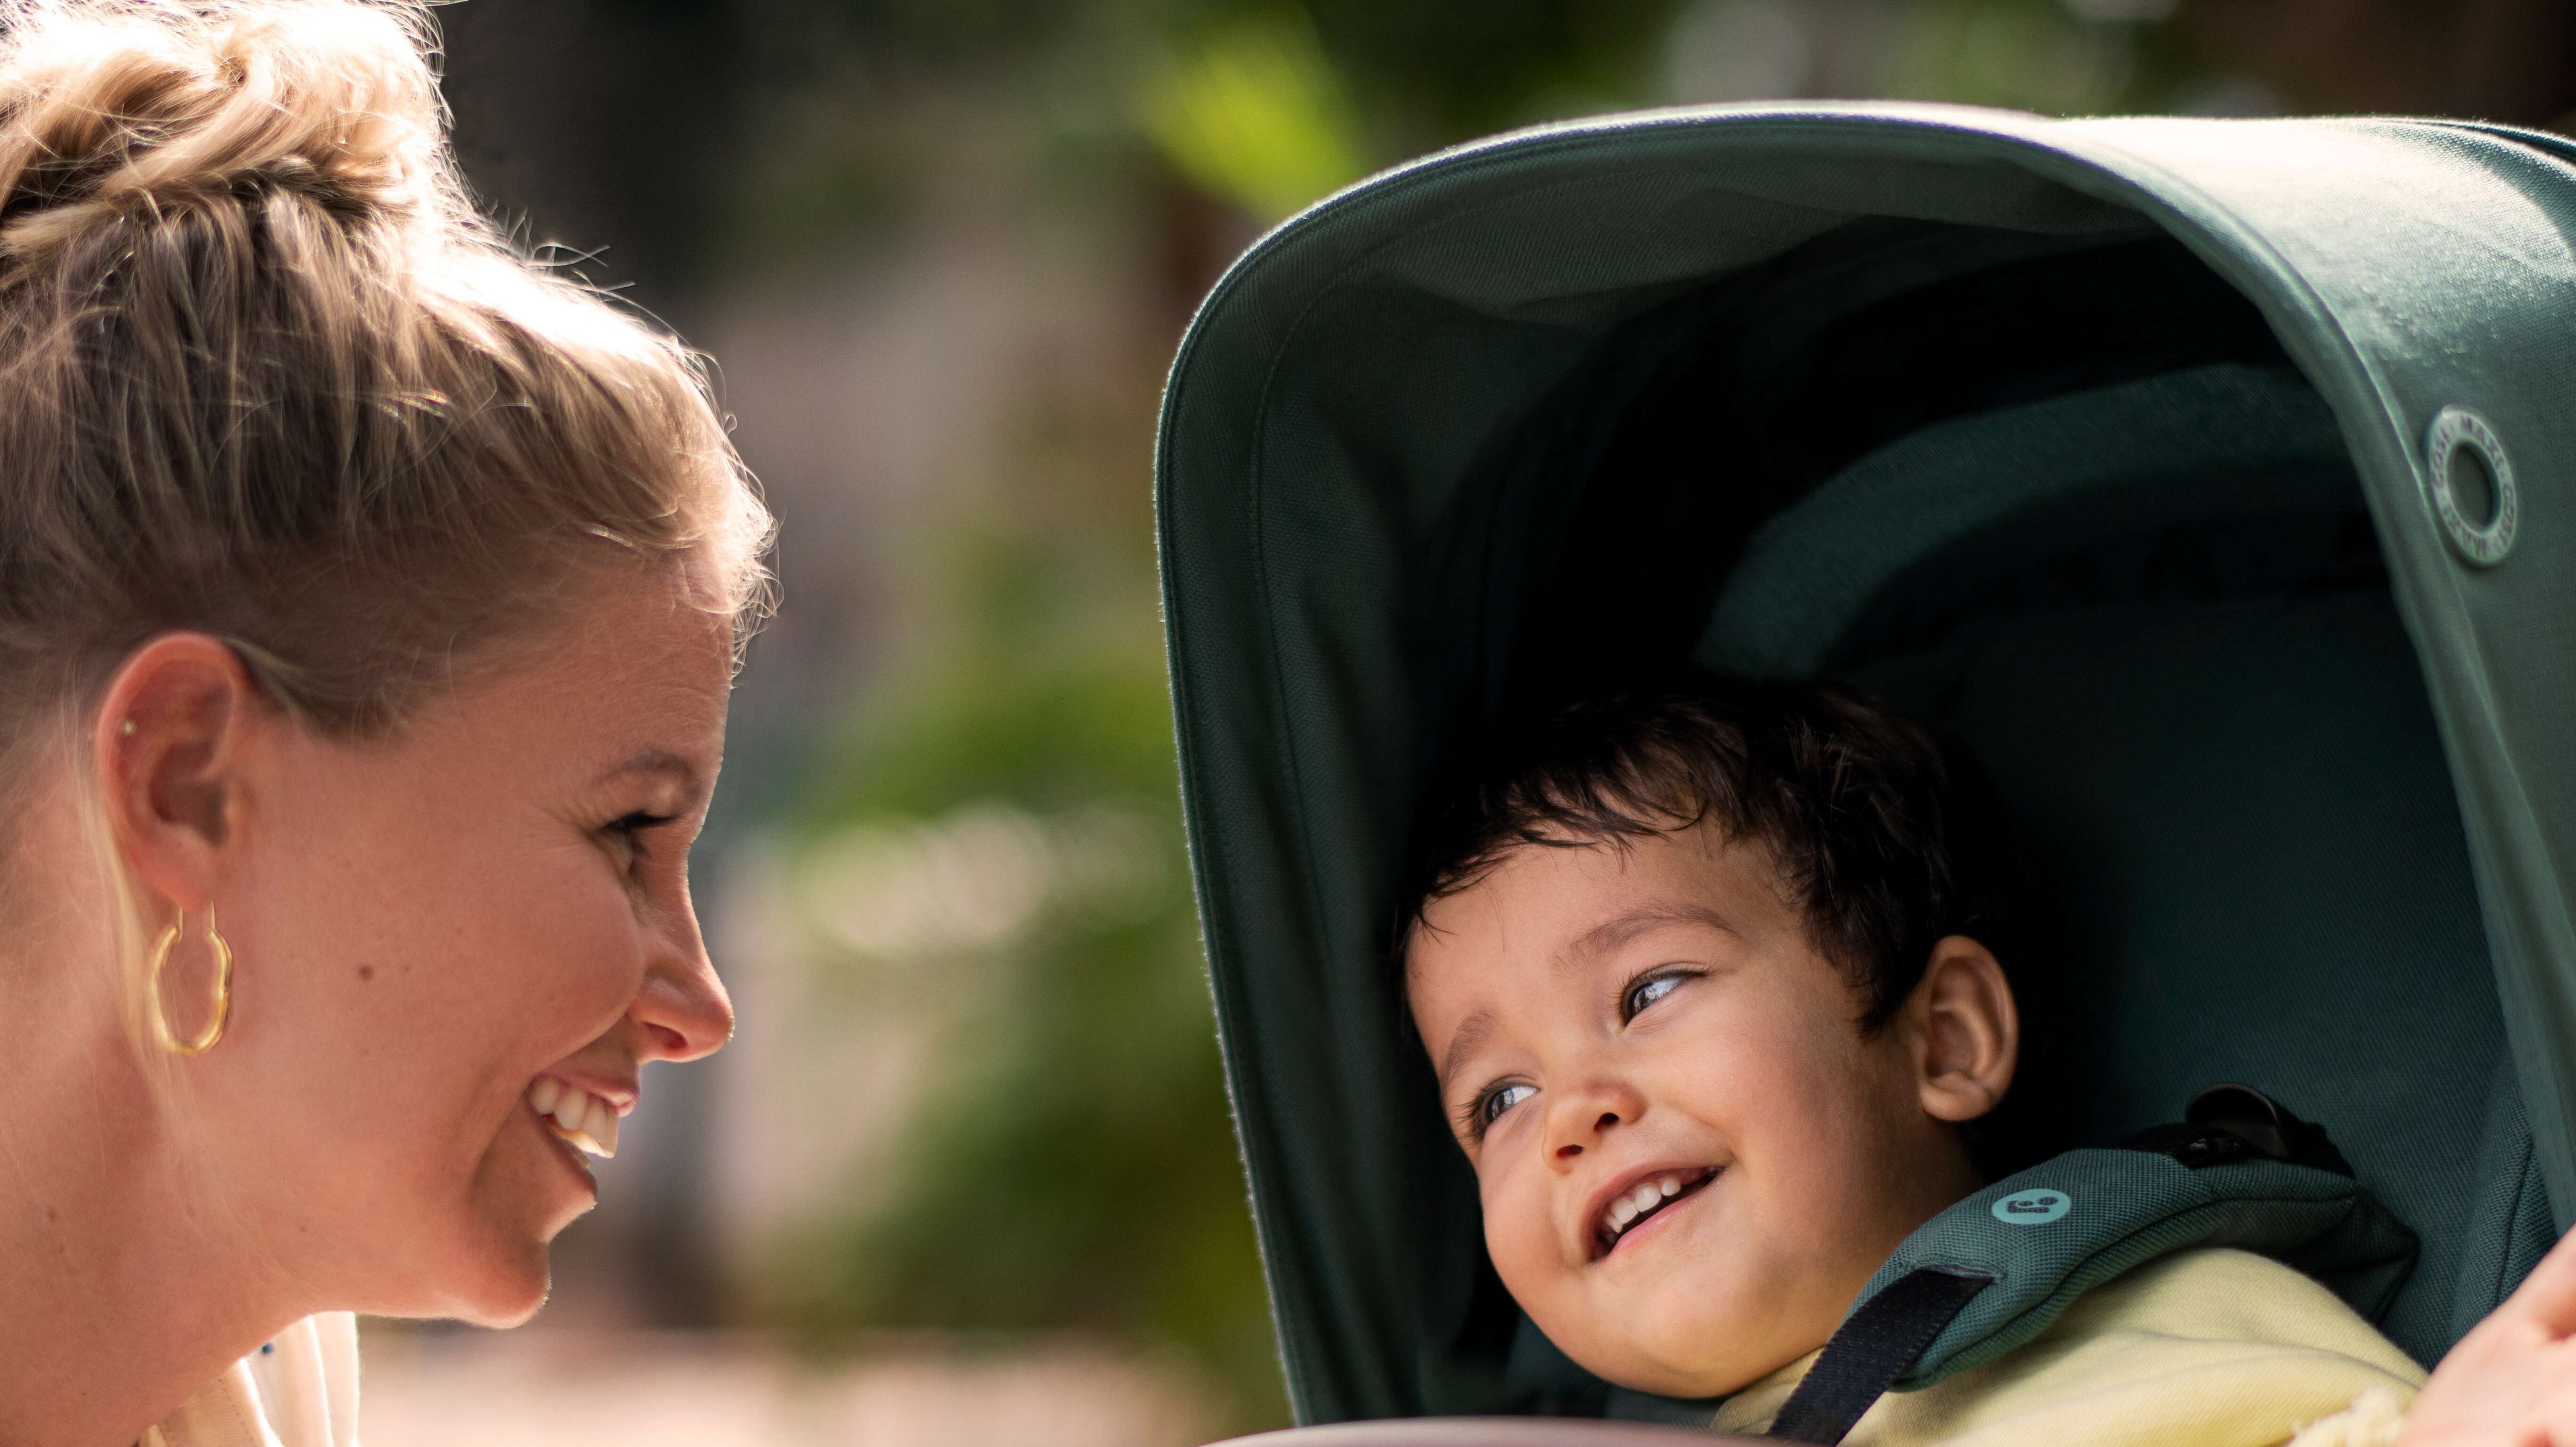 mother smiling at child in stroller